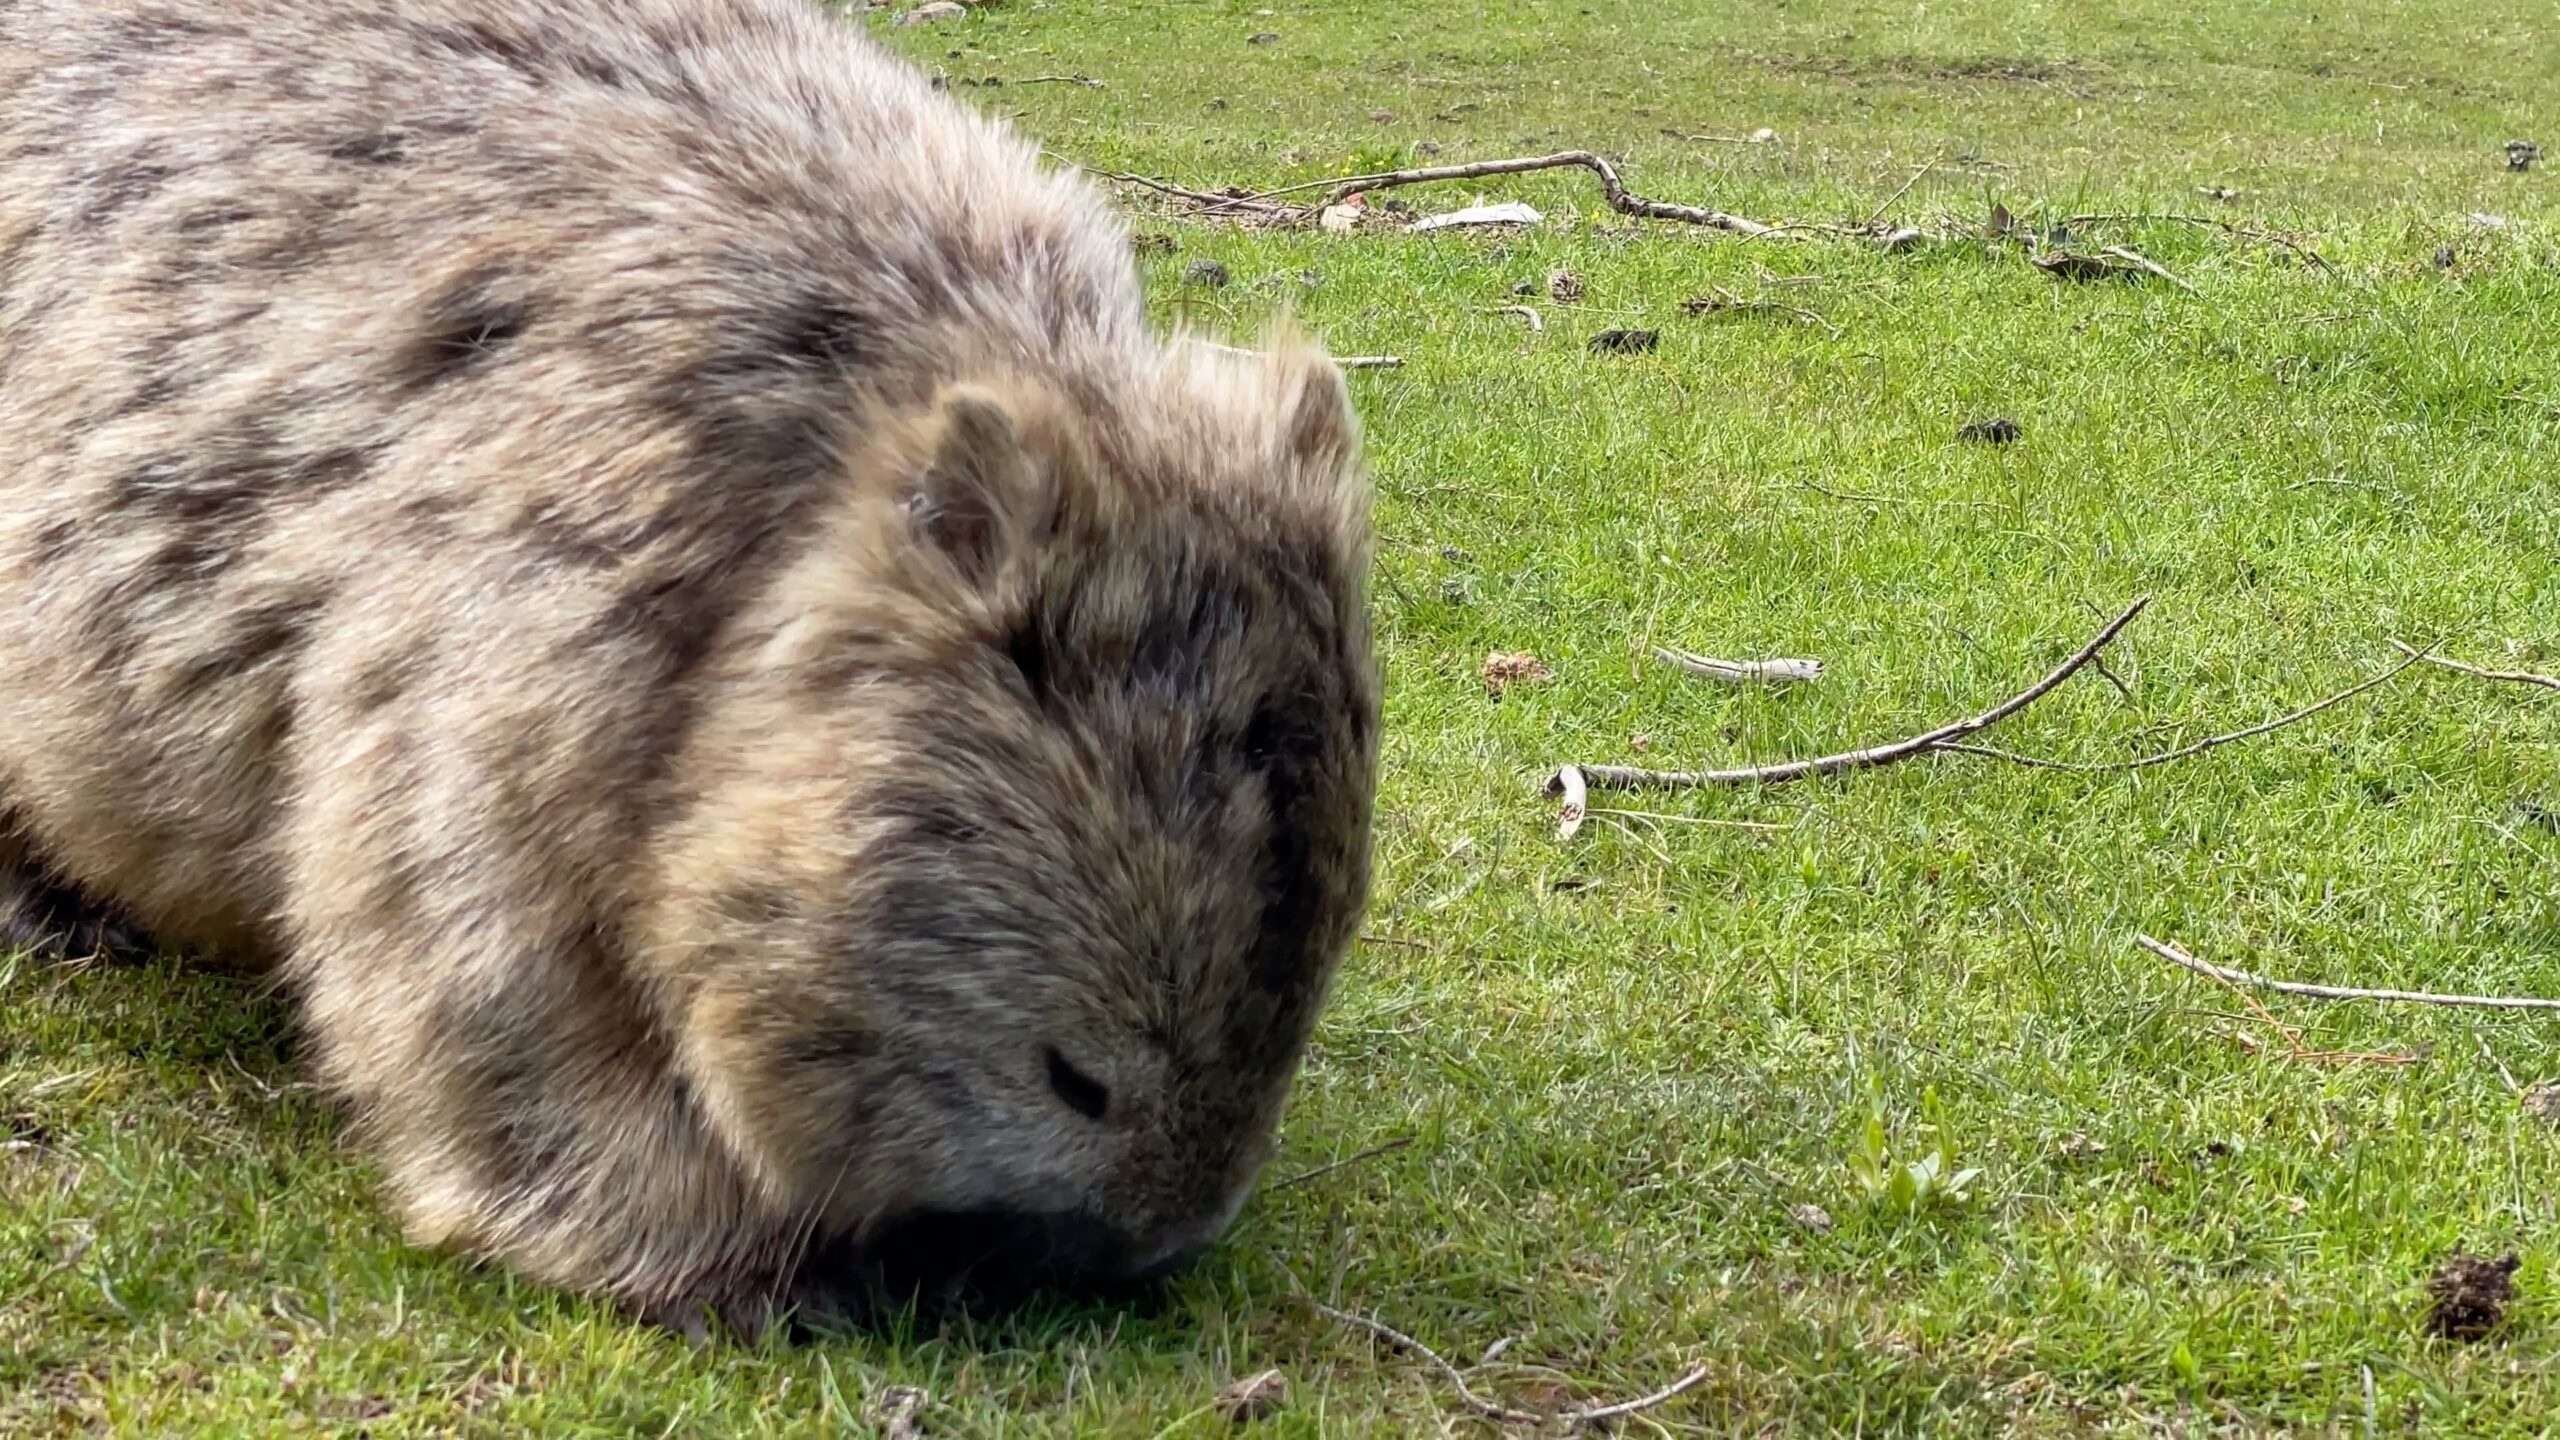 Common wombat feeding, Vombatus ursinus 4K UltraHD, UP45030